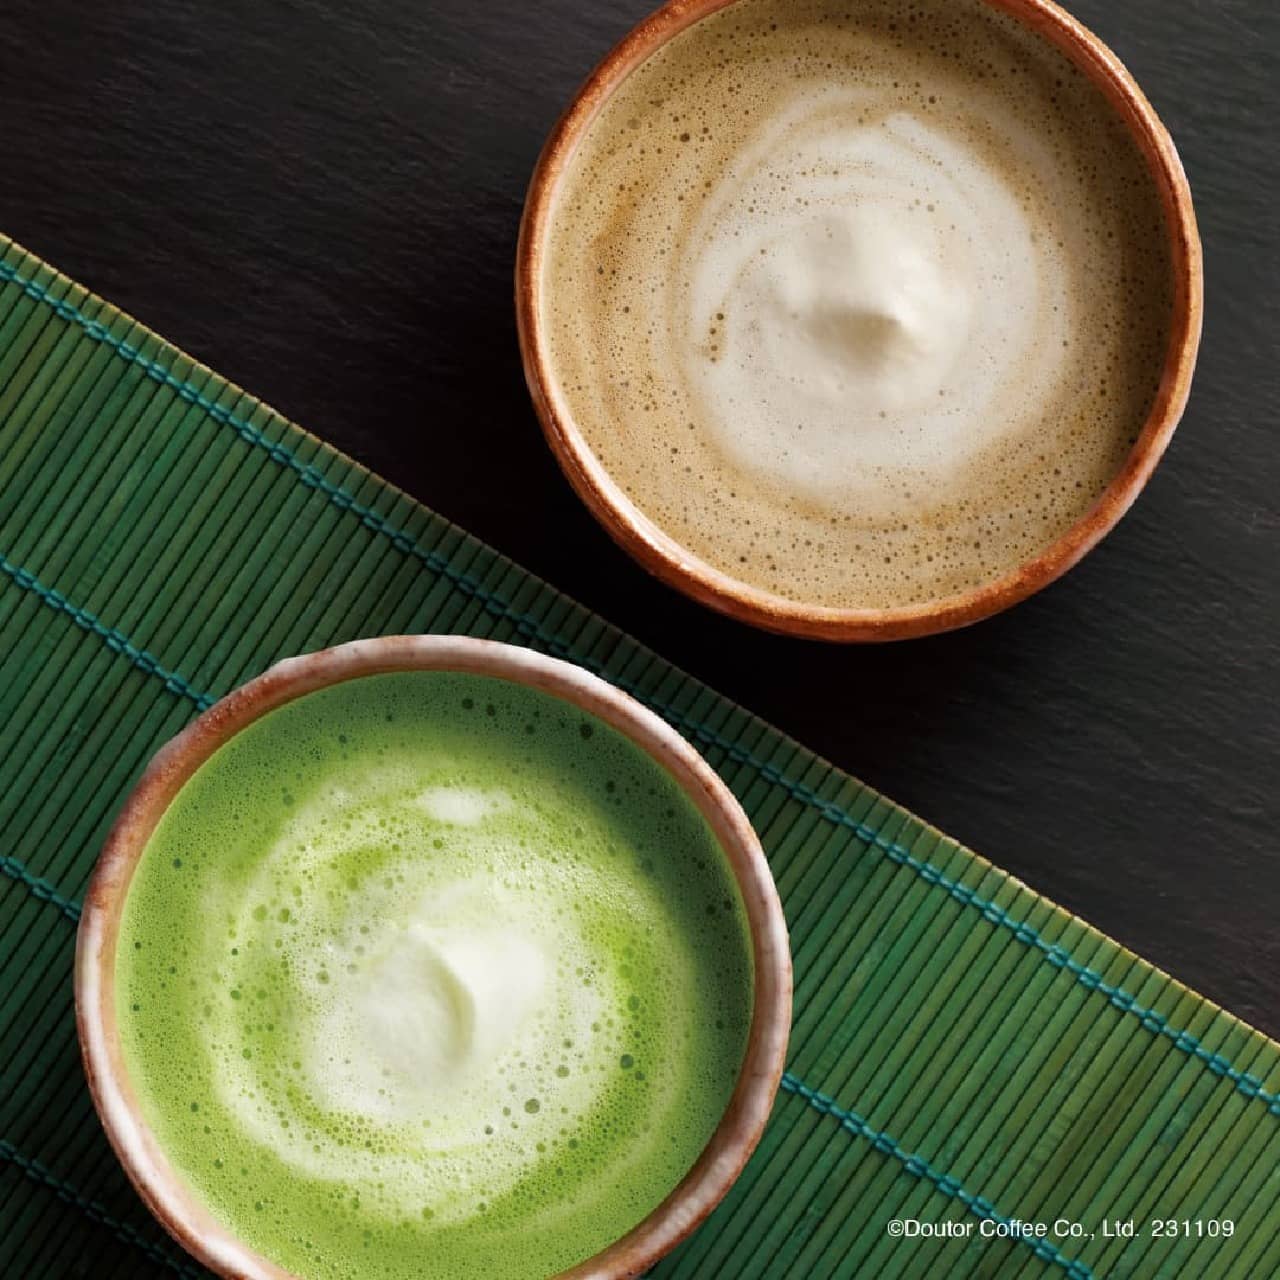 Doutor "Luxurious Matcha Latte with Kyoto-produced Ichibancha Green Tea / Dark Luxurious Matcha Latte with Kyoto-produced Ichibancha Green Tea (hot or iced)